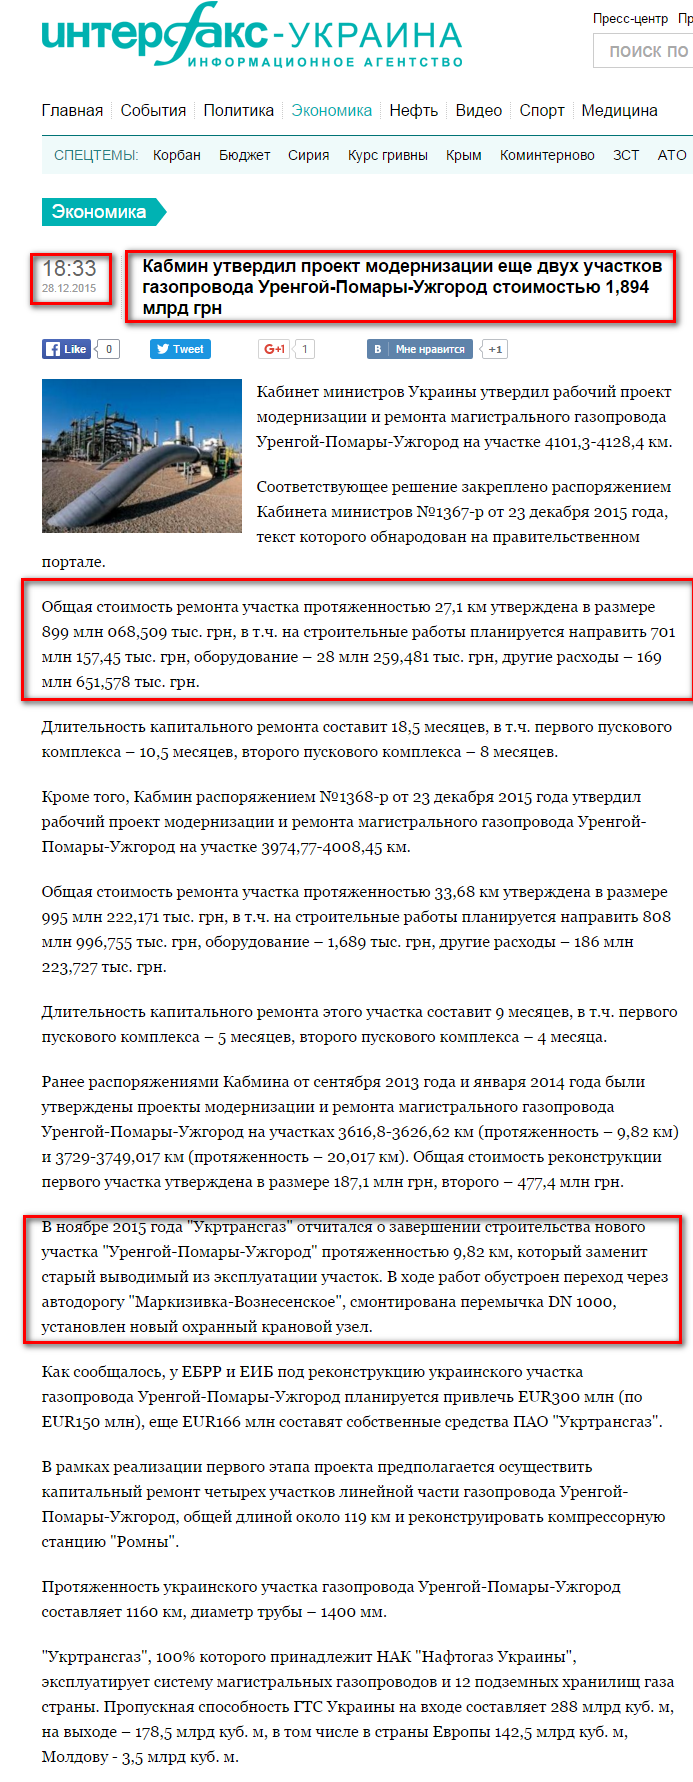 http://interfax.com.ua/news/economic/314347.html